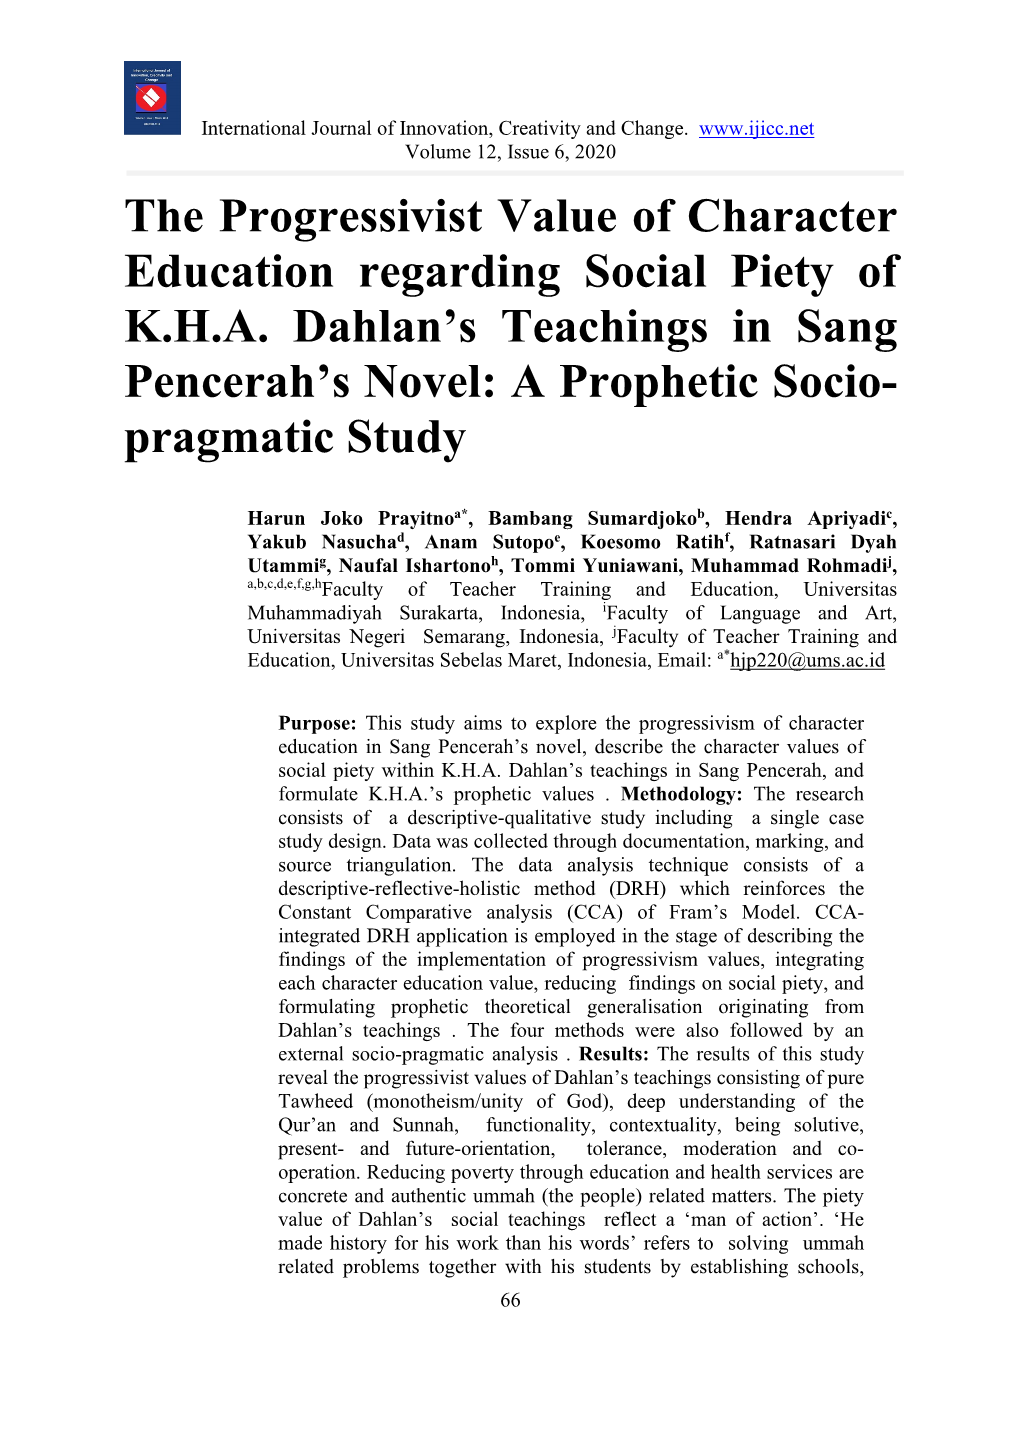 The Progressivist Value of Character Education Regarding Social Piety of K.H.A